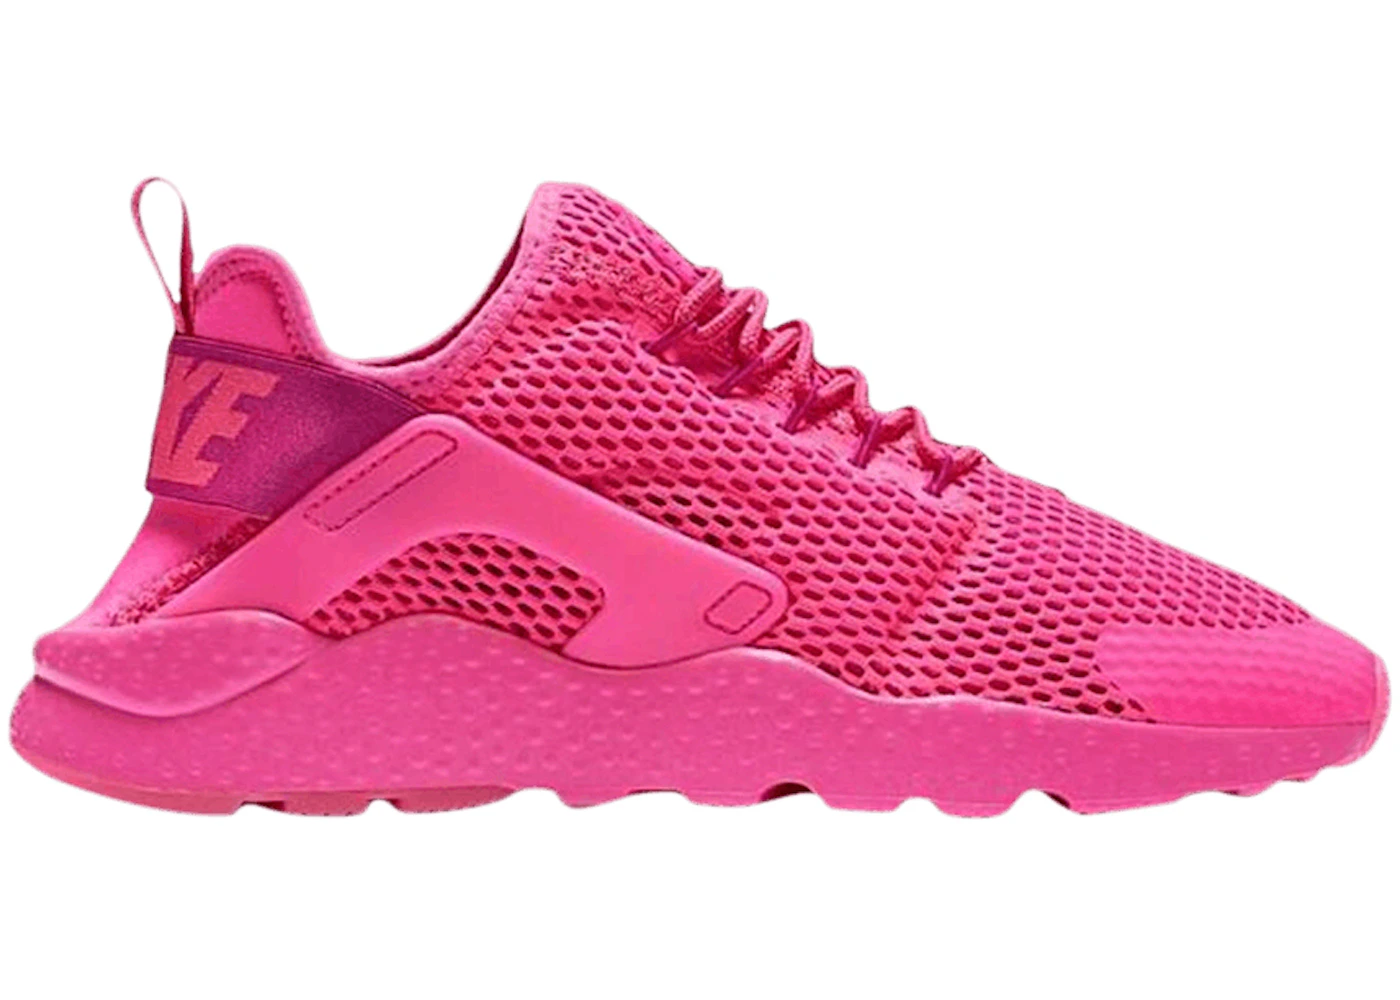 Nike Air Huarache Run Ultra Breathe Pink Blast (Women's) - 833292-600 - US